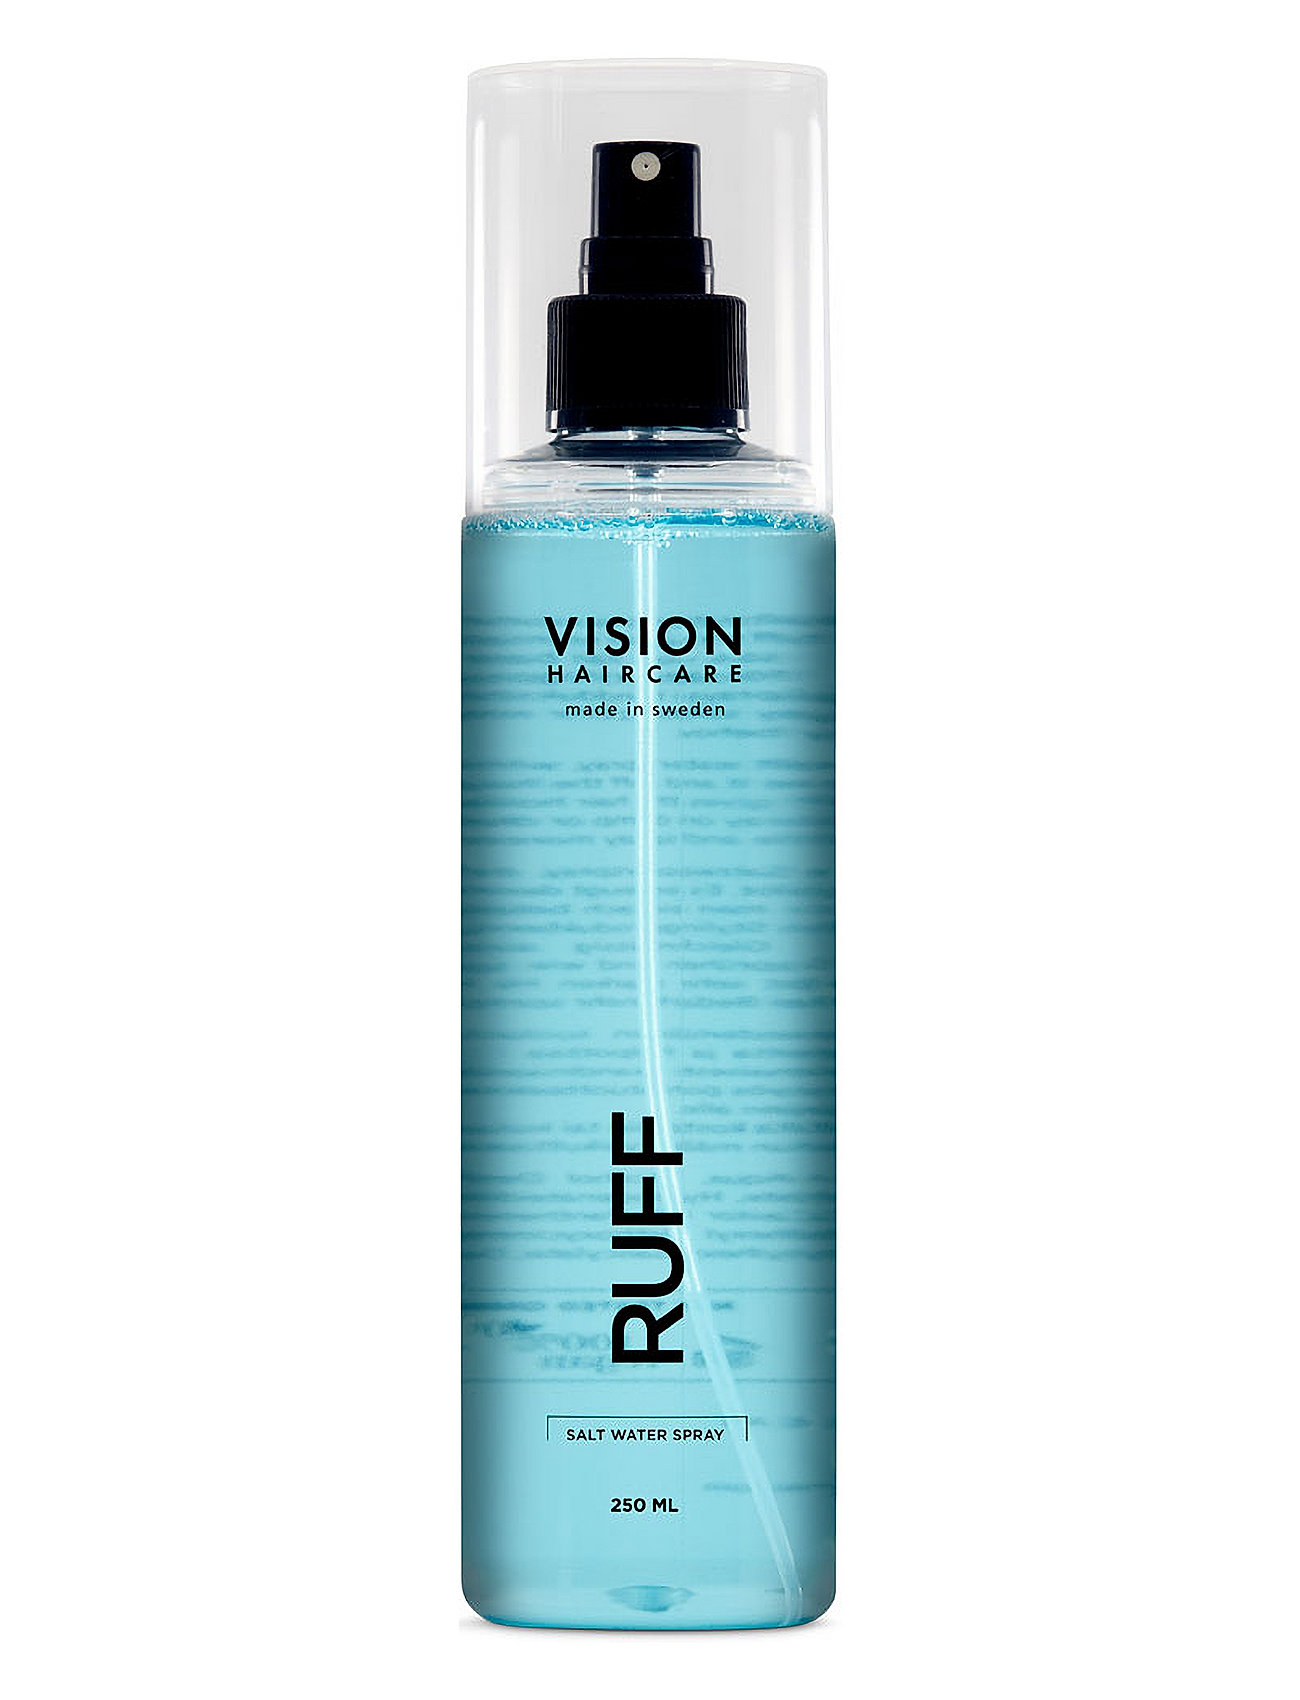 Ruff Saltwater Spray Beauty Women Hair Styling Salt Spray Nude Vision Haircare